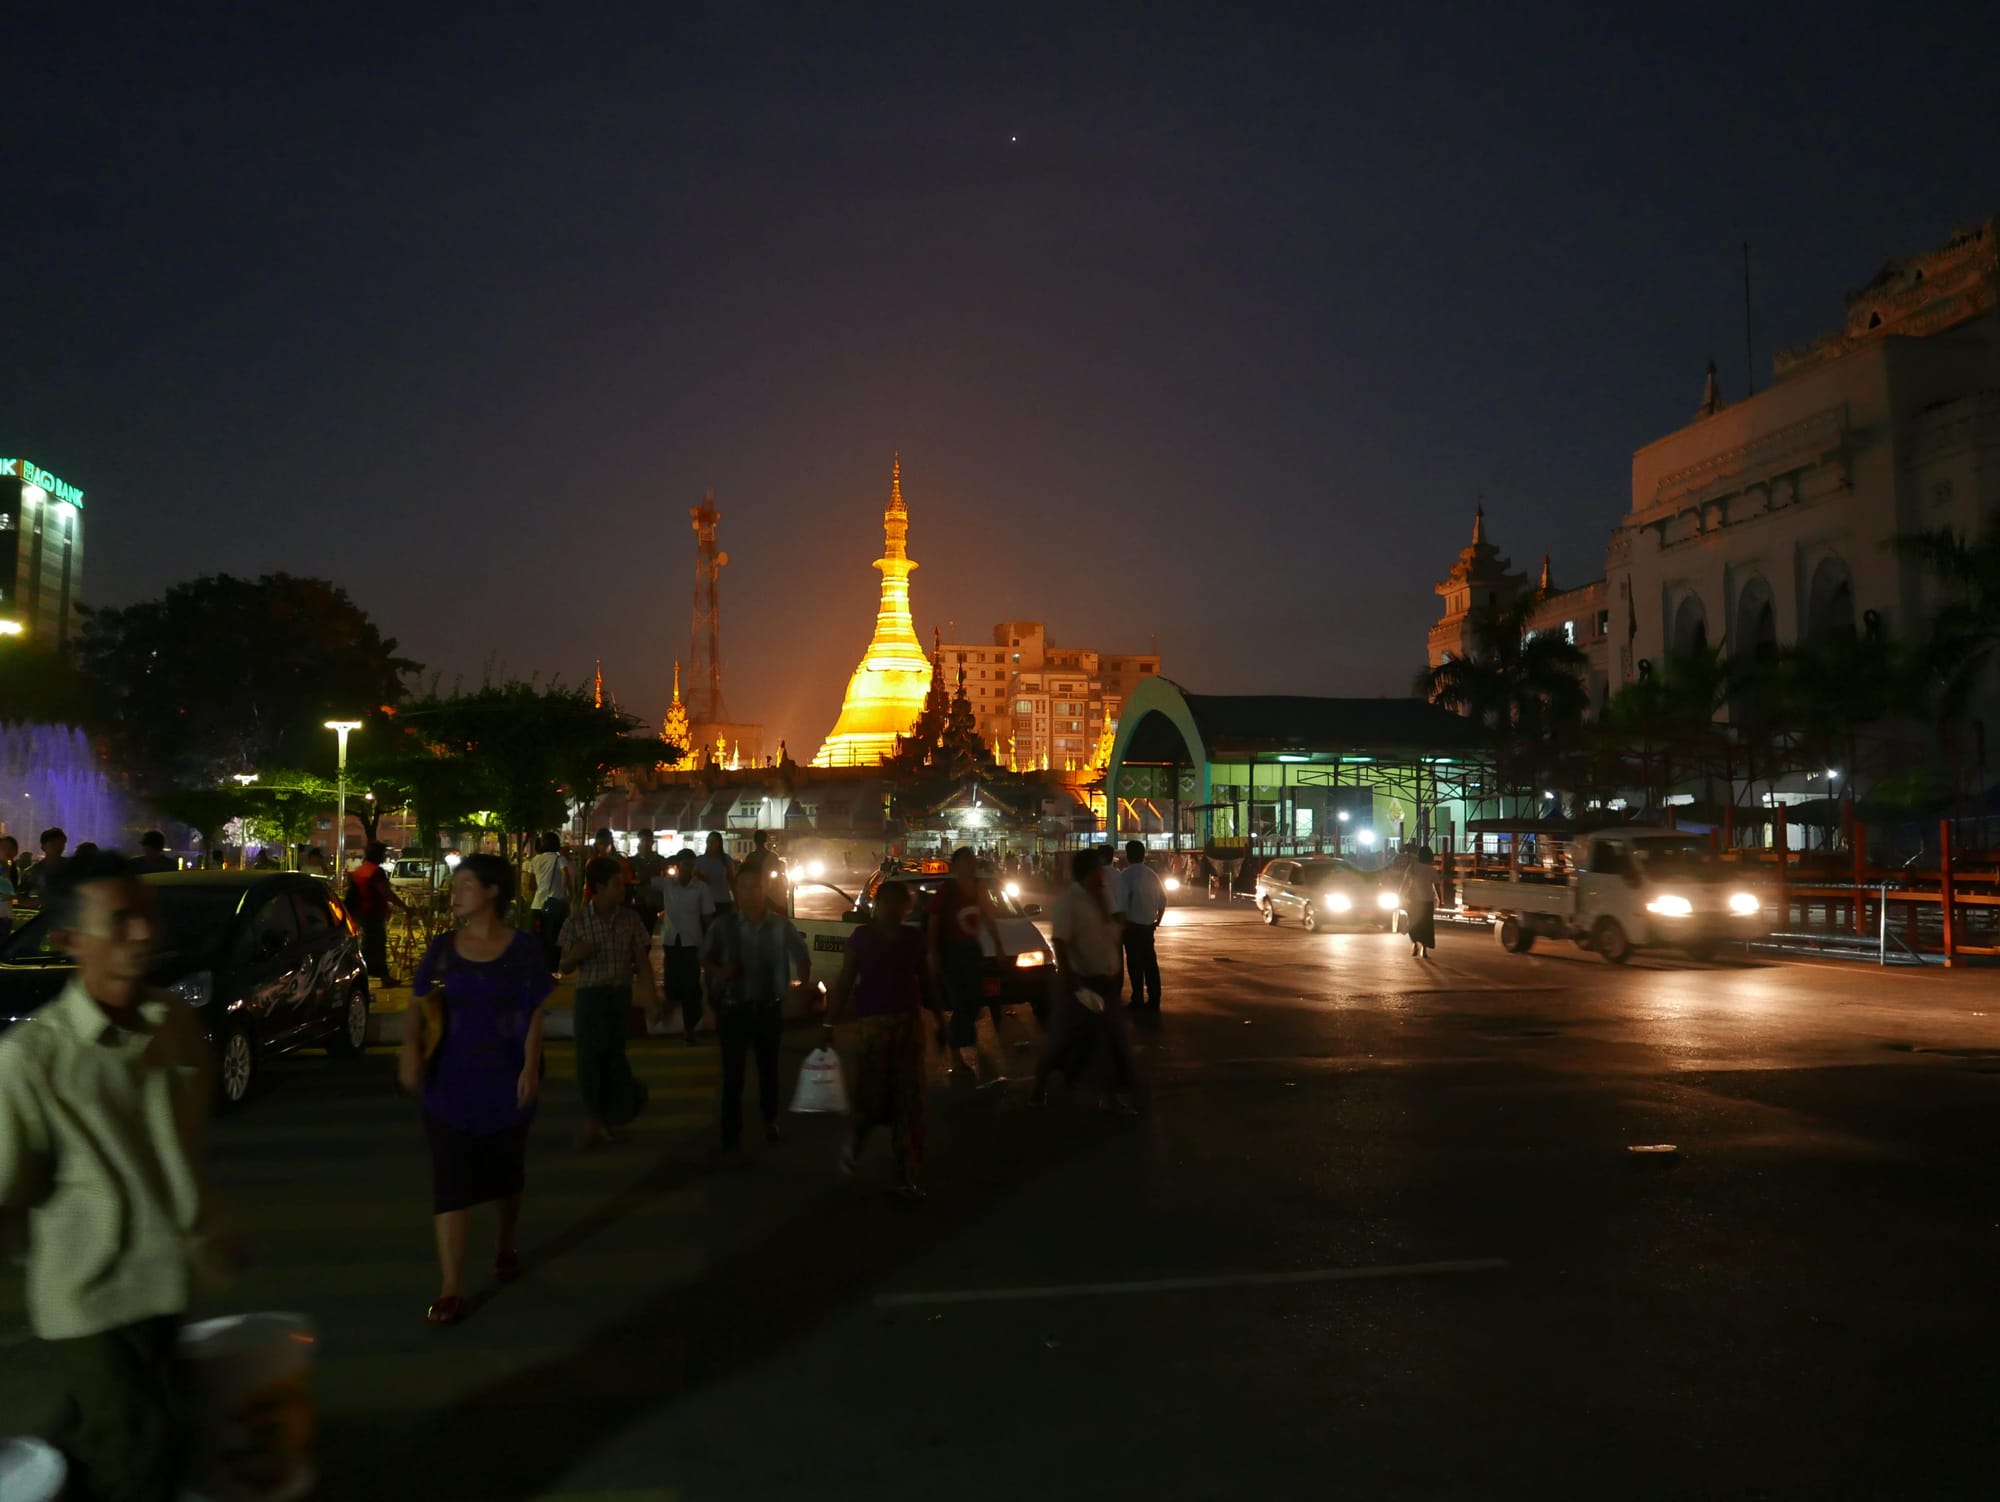 Photo by Author — The street at night with illuminated pagoda